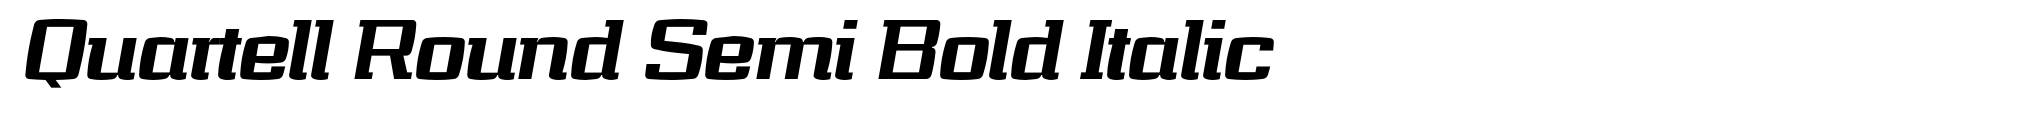 Quartell Round Semi Bold Italic image